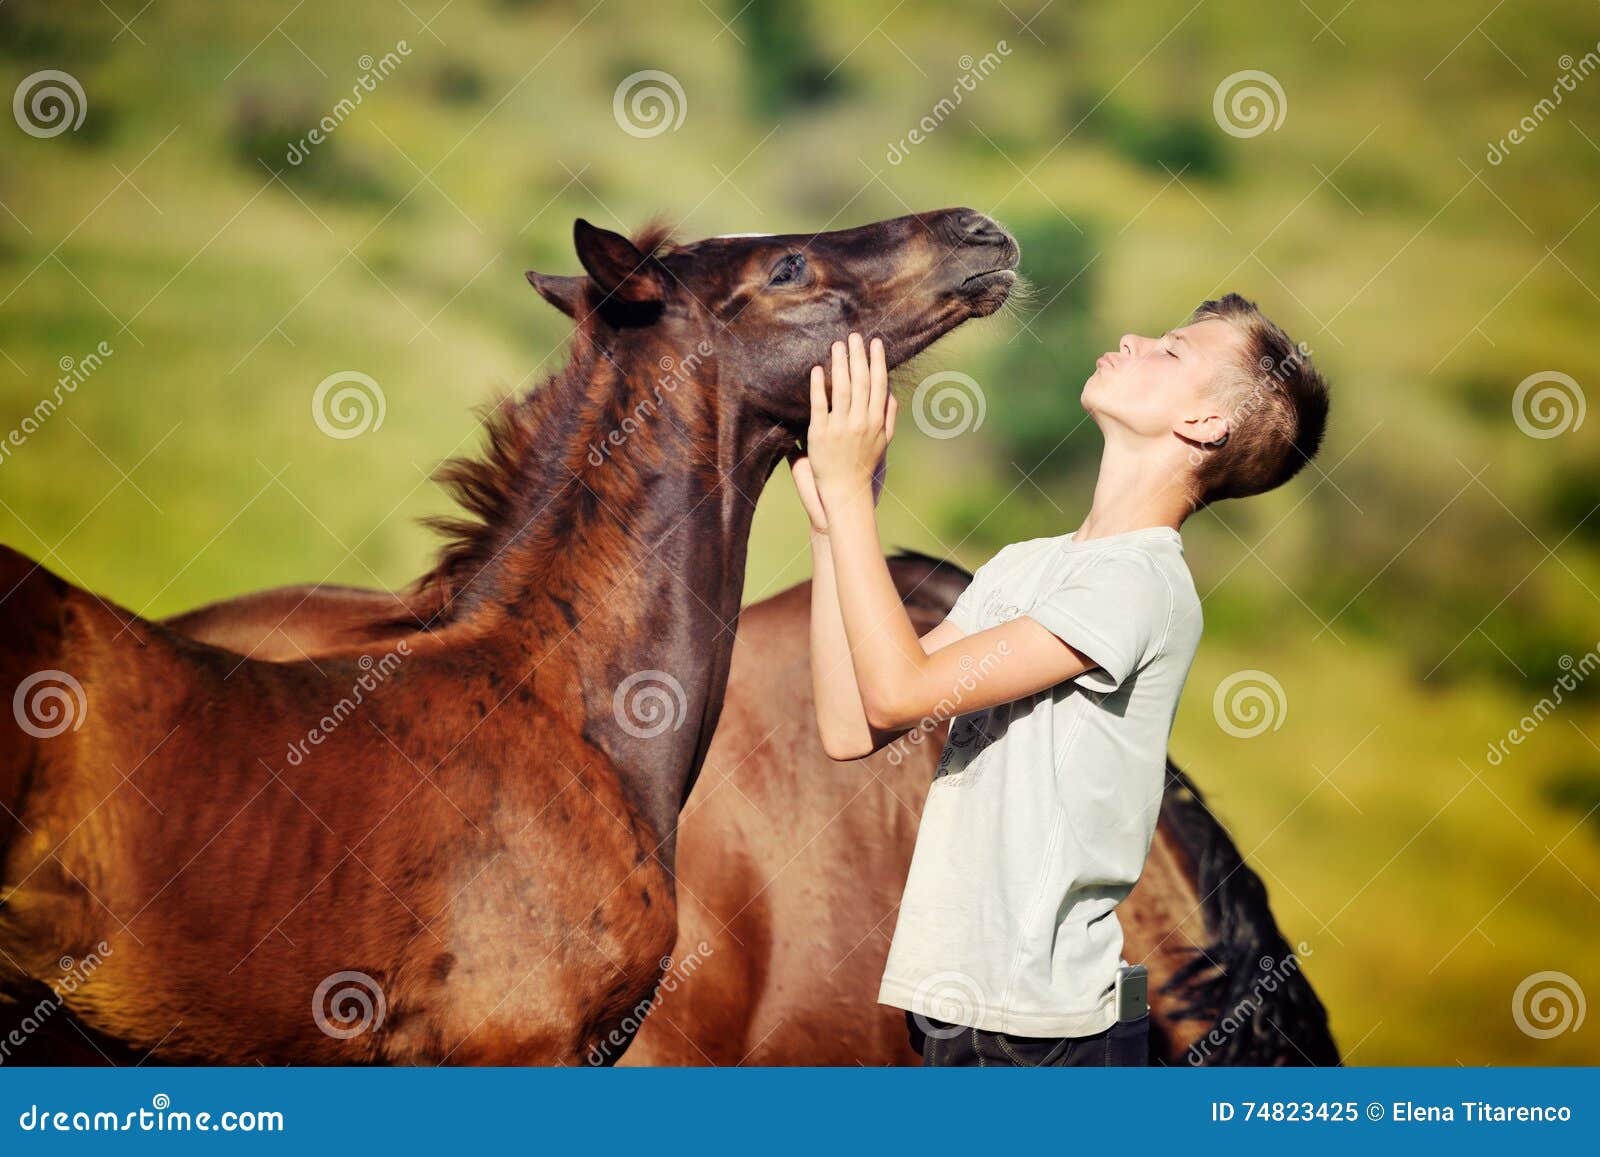 teen boy communicates with horses